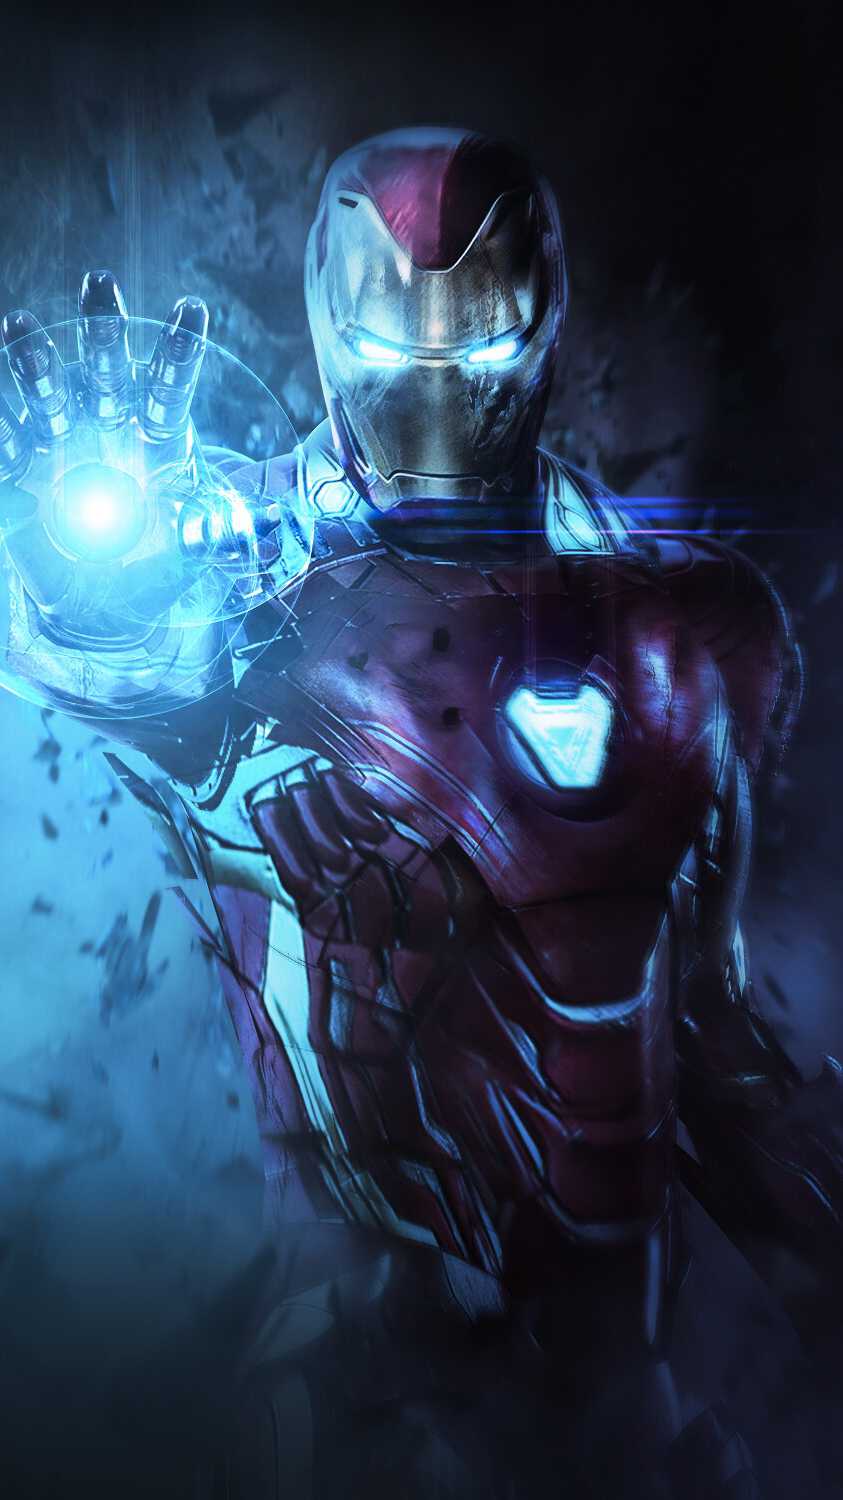 Iron Man Mark 85 Armor Avengers Endgame IPhone Wallpaper Wallpaper, iPhone Wallpaper